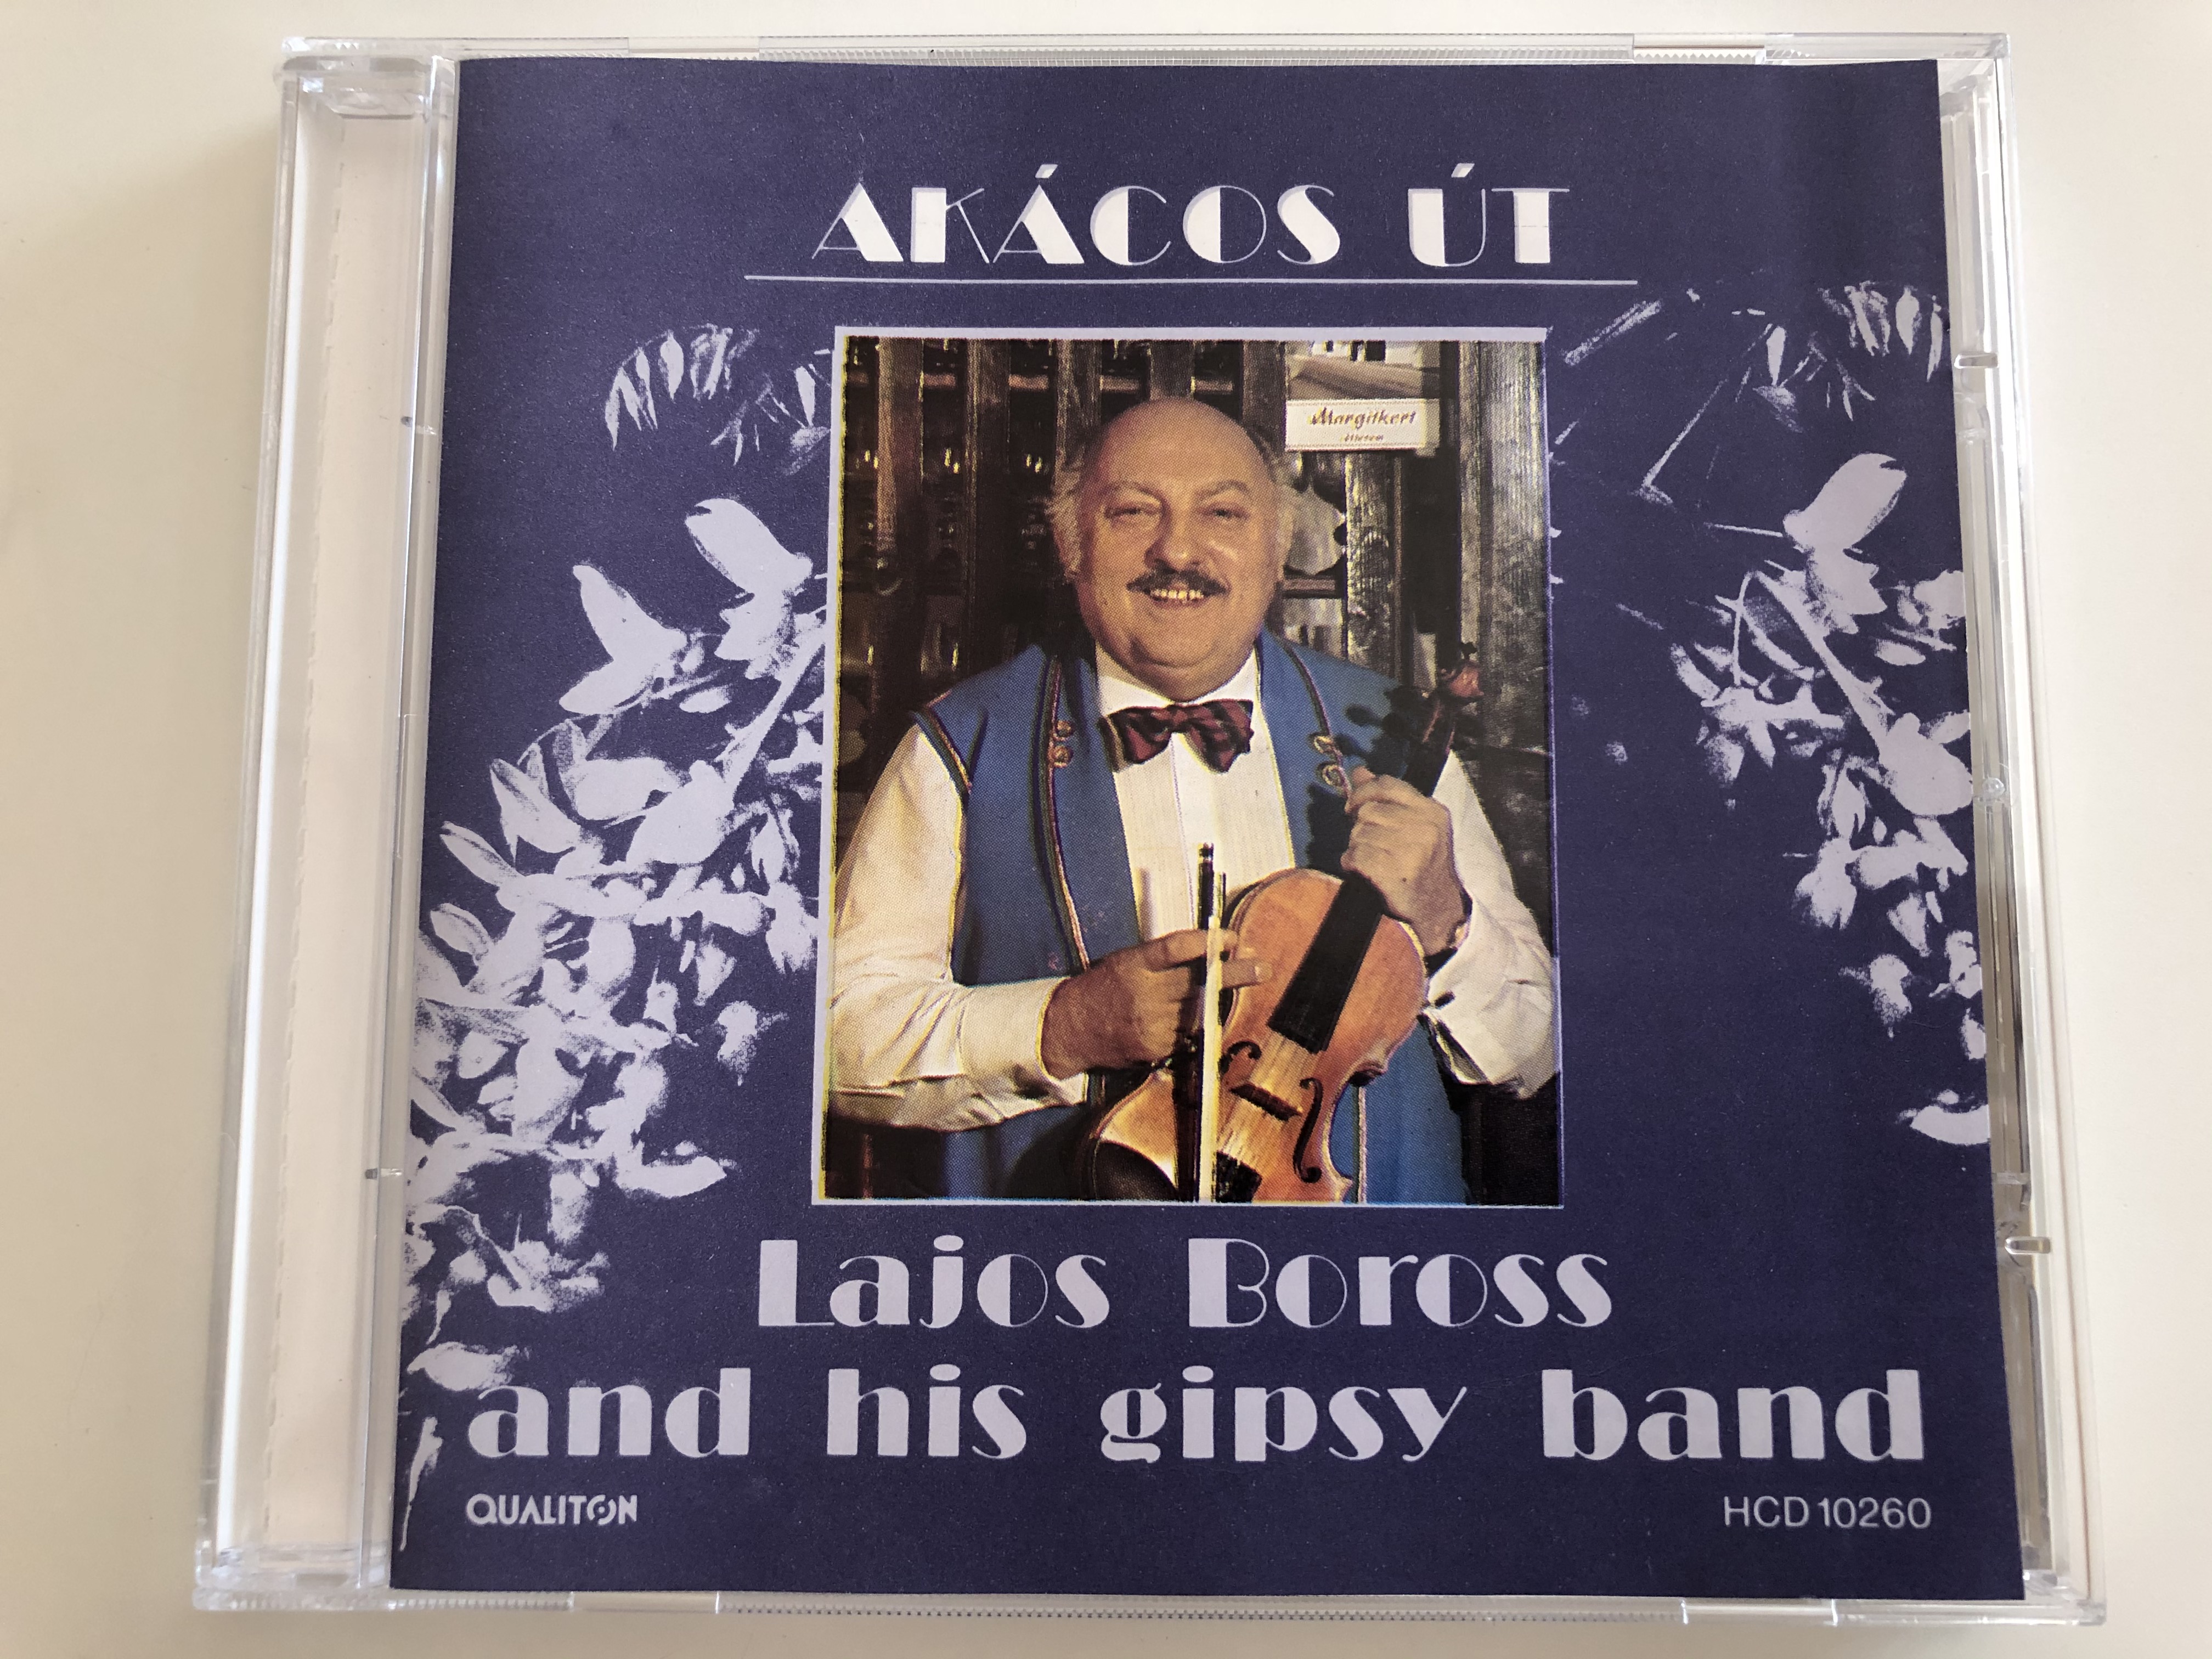 ak-cos-t-lajos-boross-and-his-gypsy-band-qualiton-audio-cd-1990-hcd-10260-1-.jpg